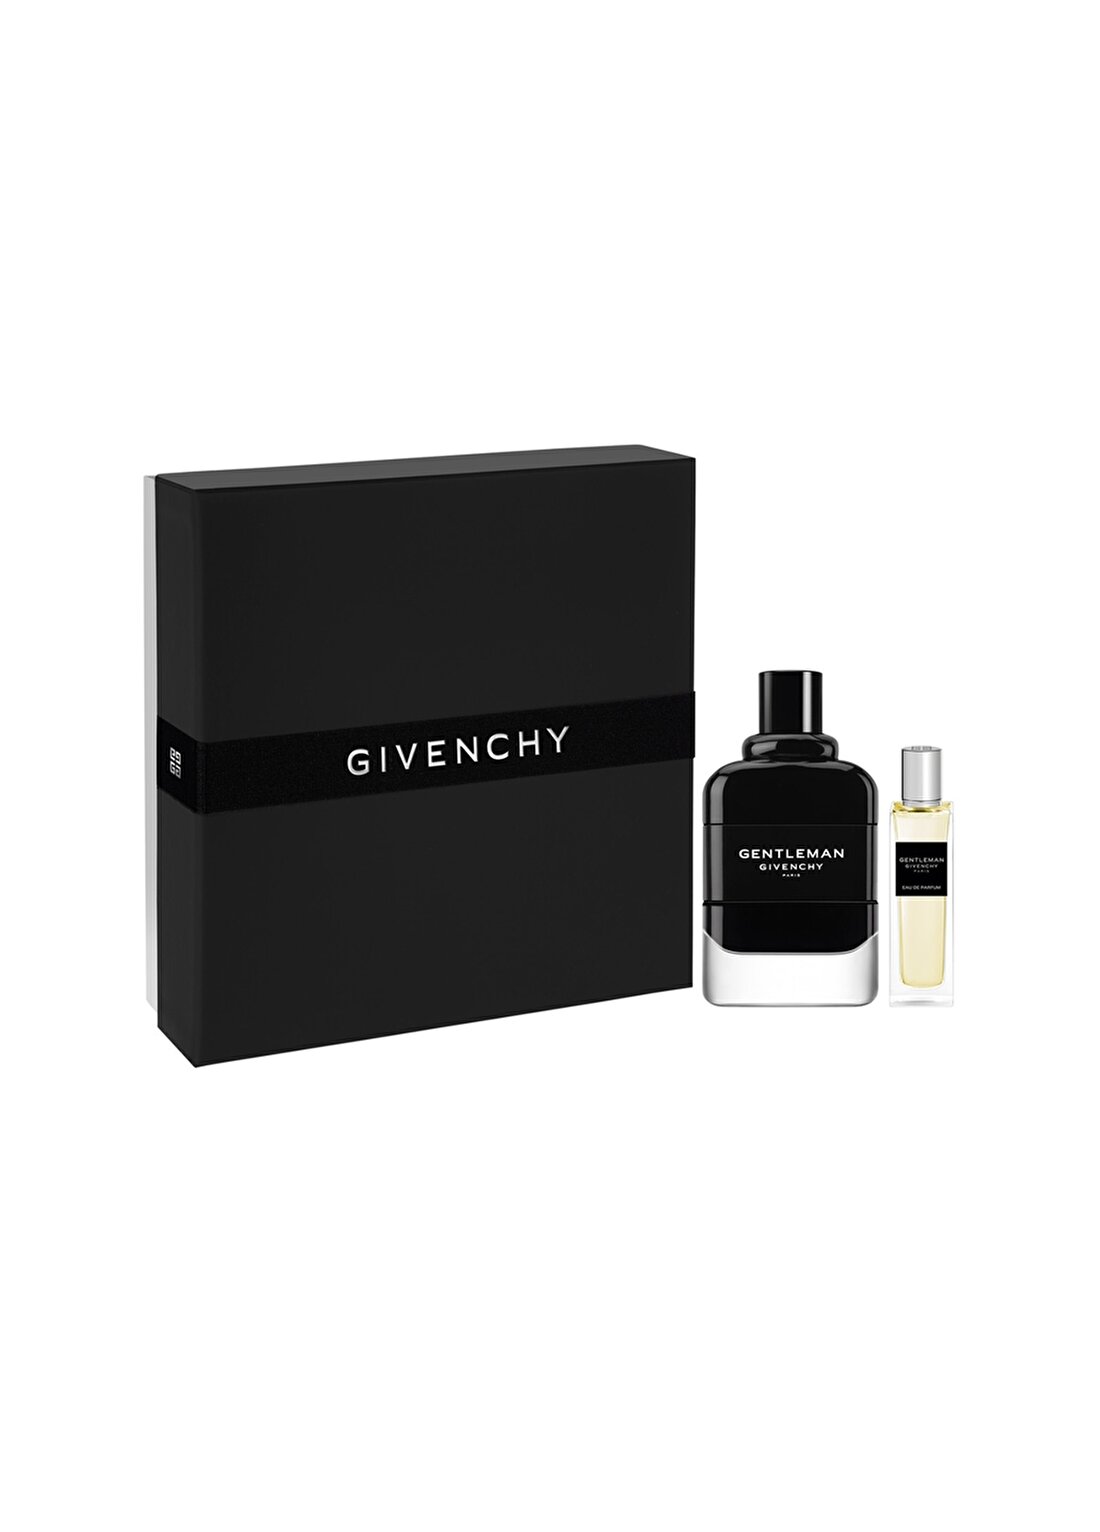 Givenchy Gentleman Edp 100 Ml + Travel Spray 15 Ml Parfüm Set